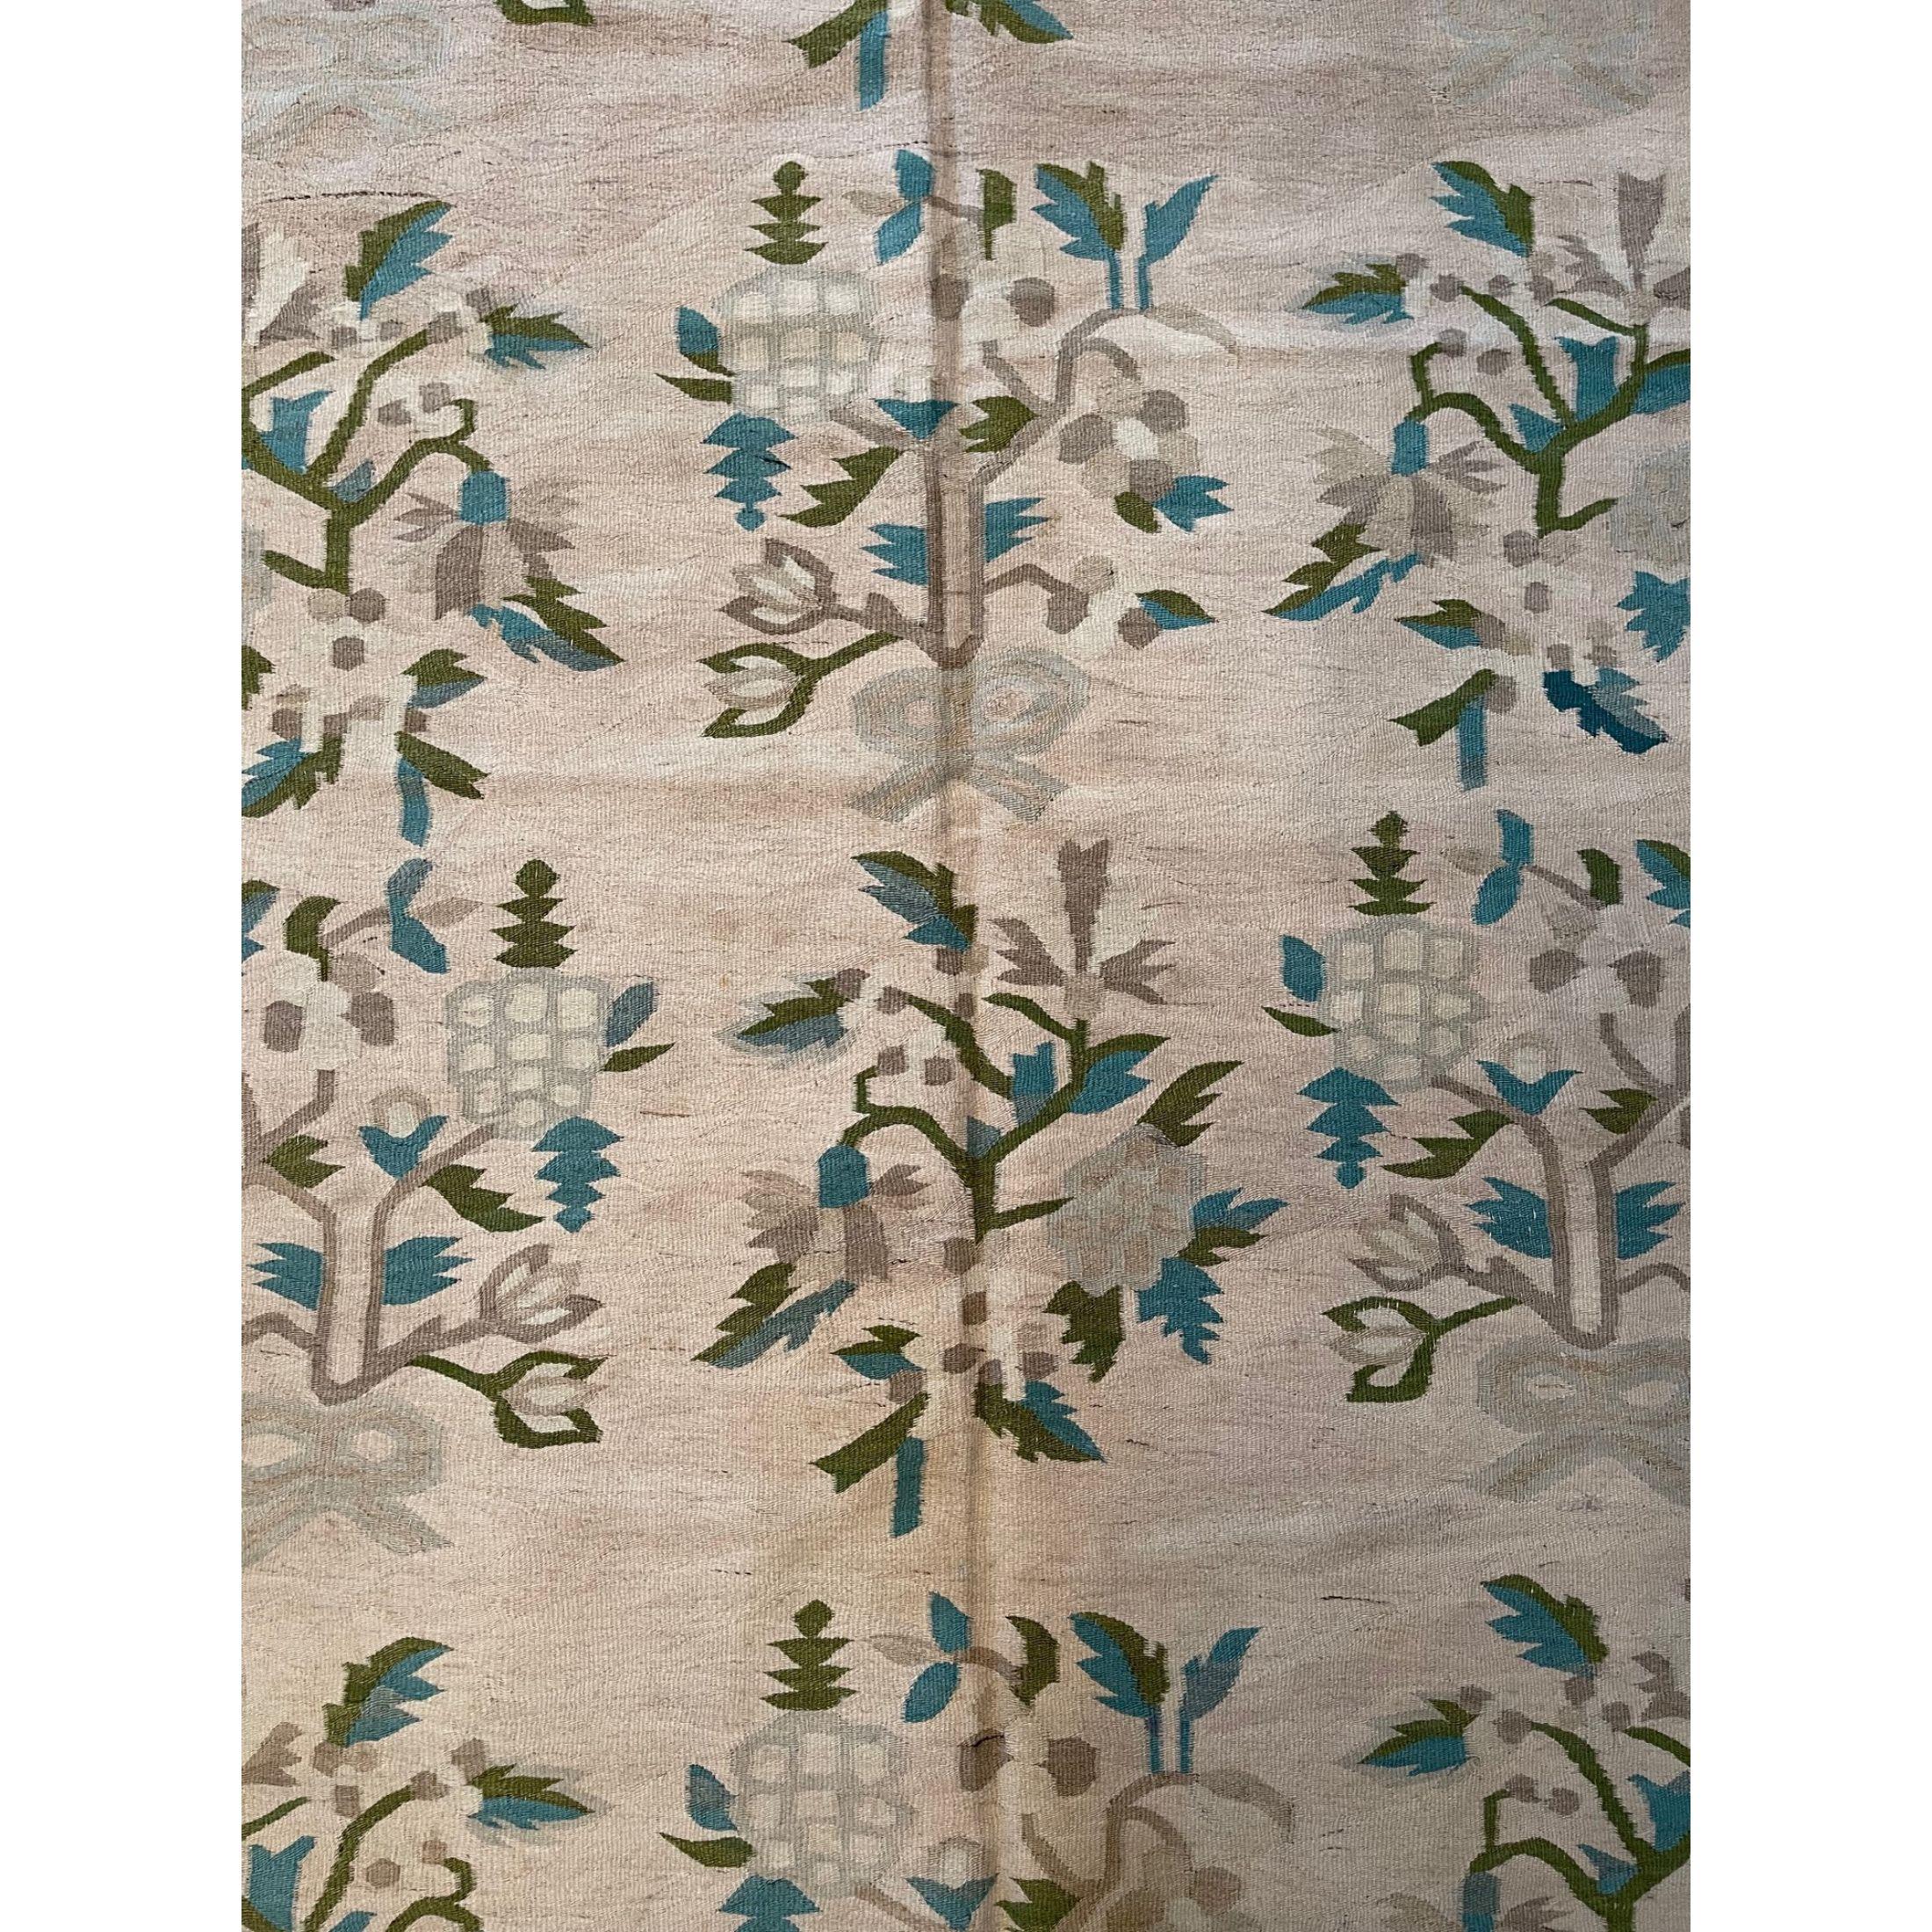 Ca. 1900 Antique Kilim Floral Design Rug